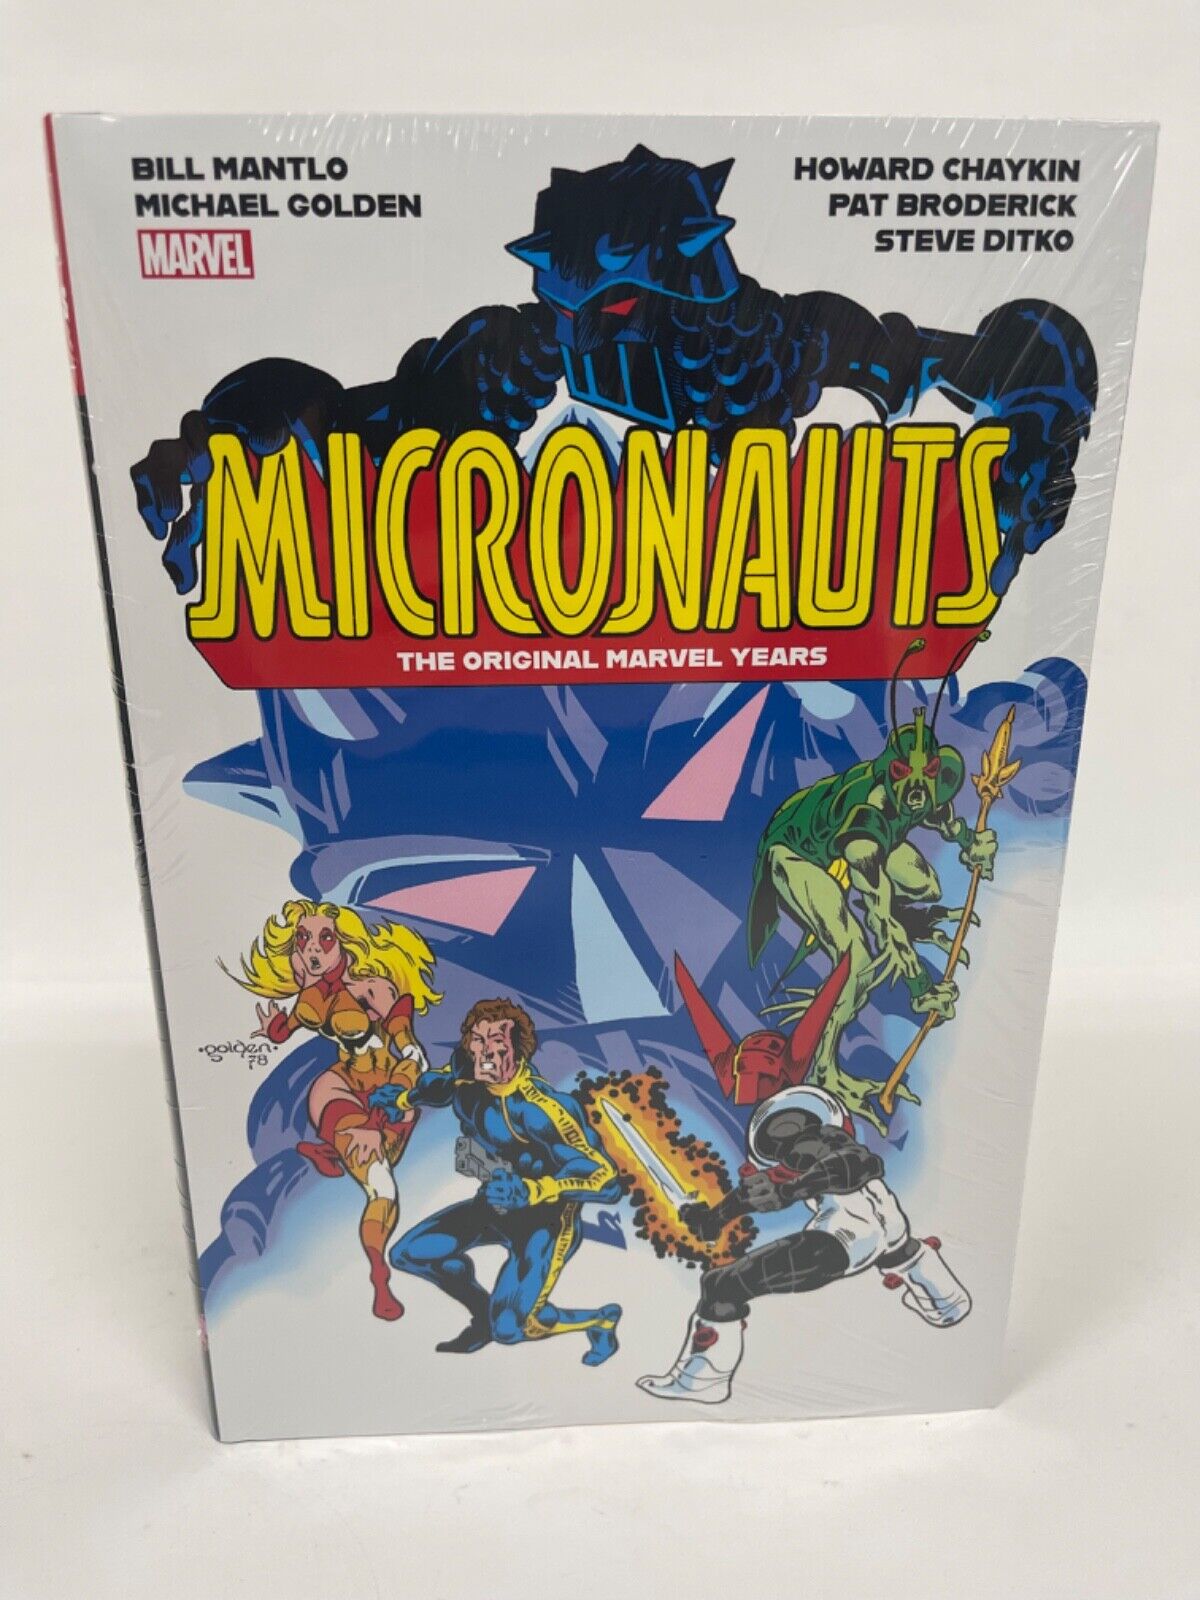 Micronauts Original Marvel Years Omnibus Vol 1 GOLDEN DM COVER New HC Comics